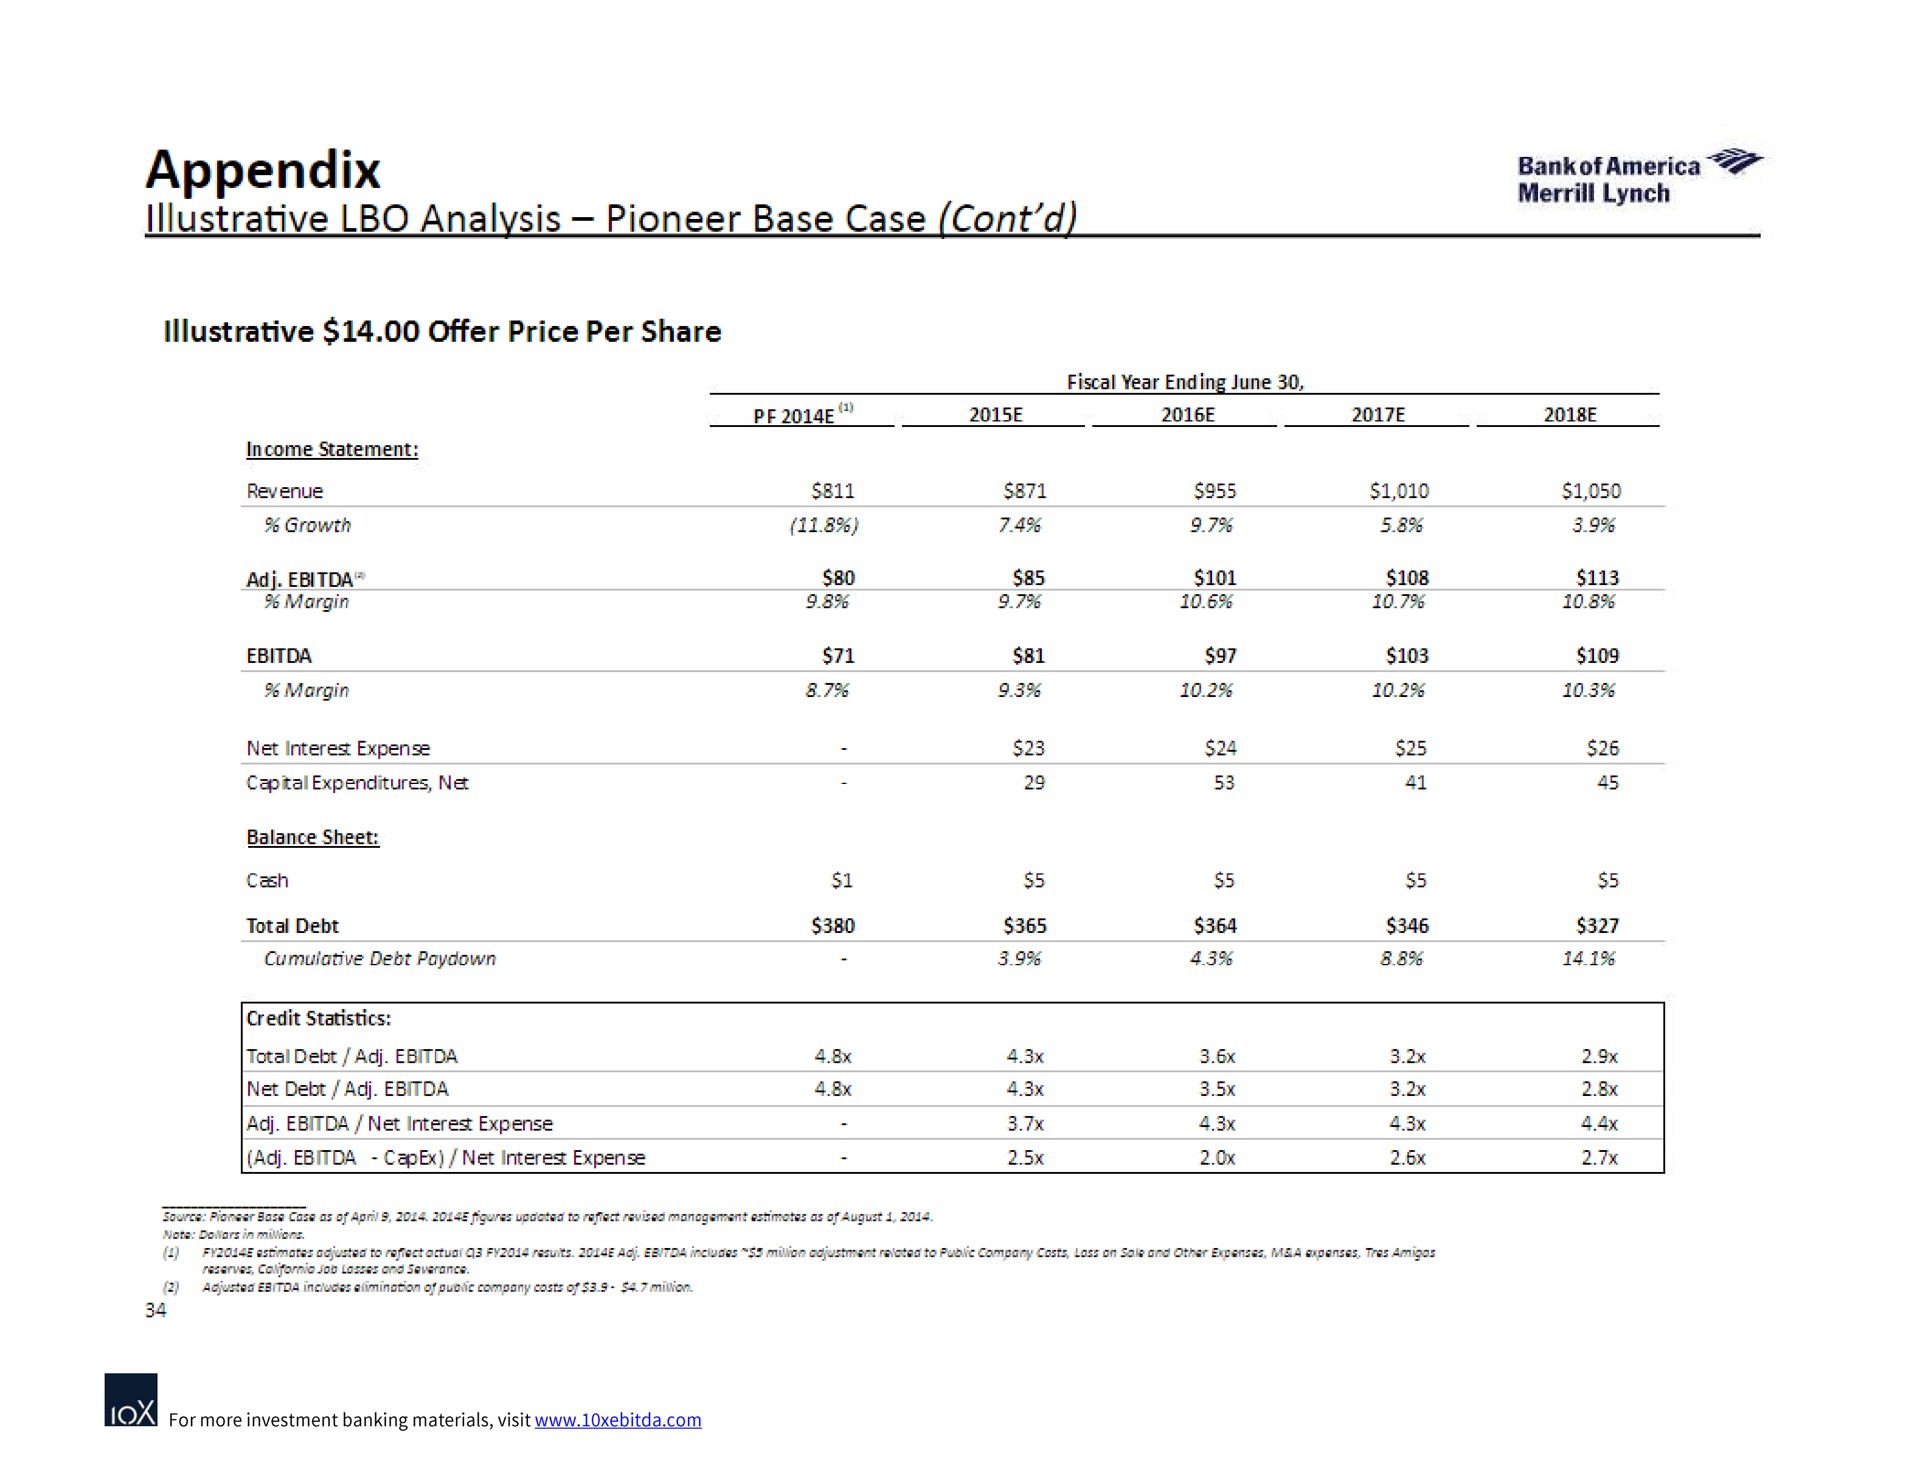 appendix illustrative analysis pioneer base case a | Bank of America